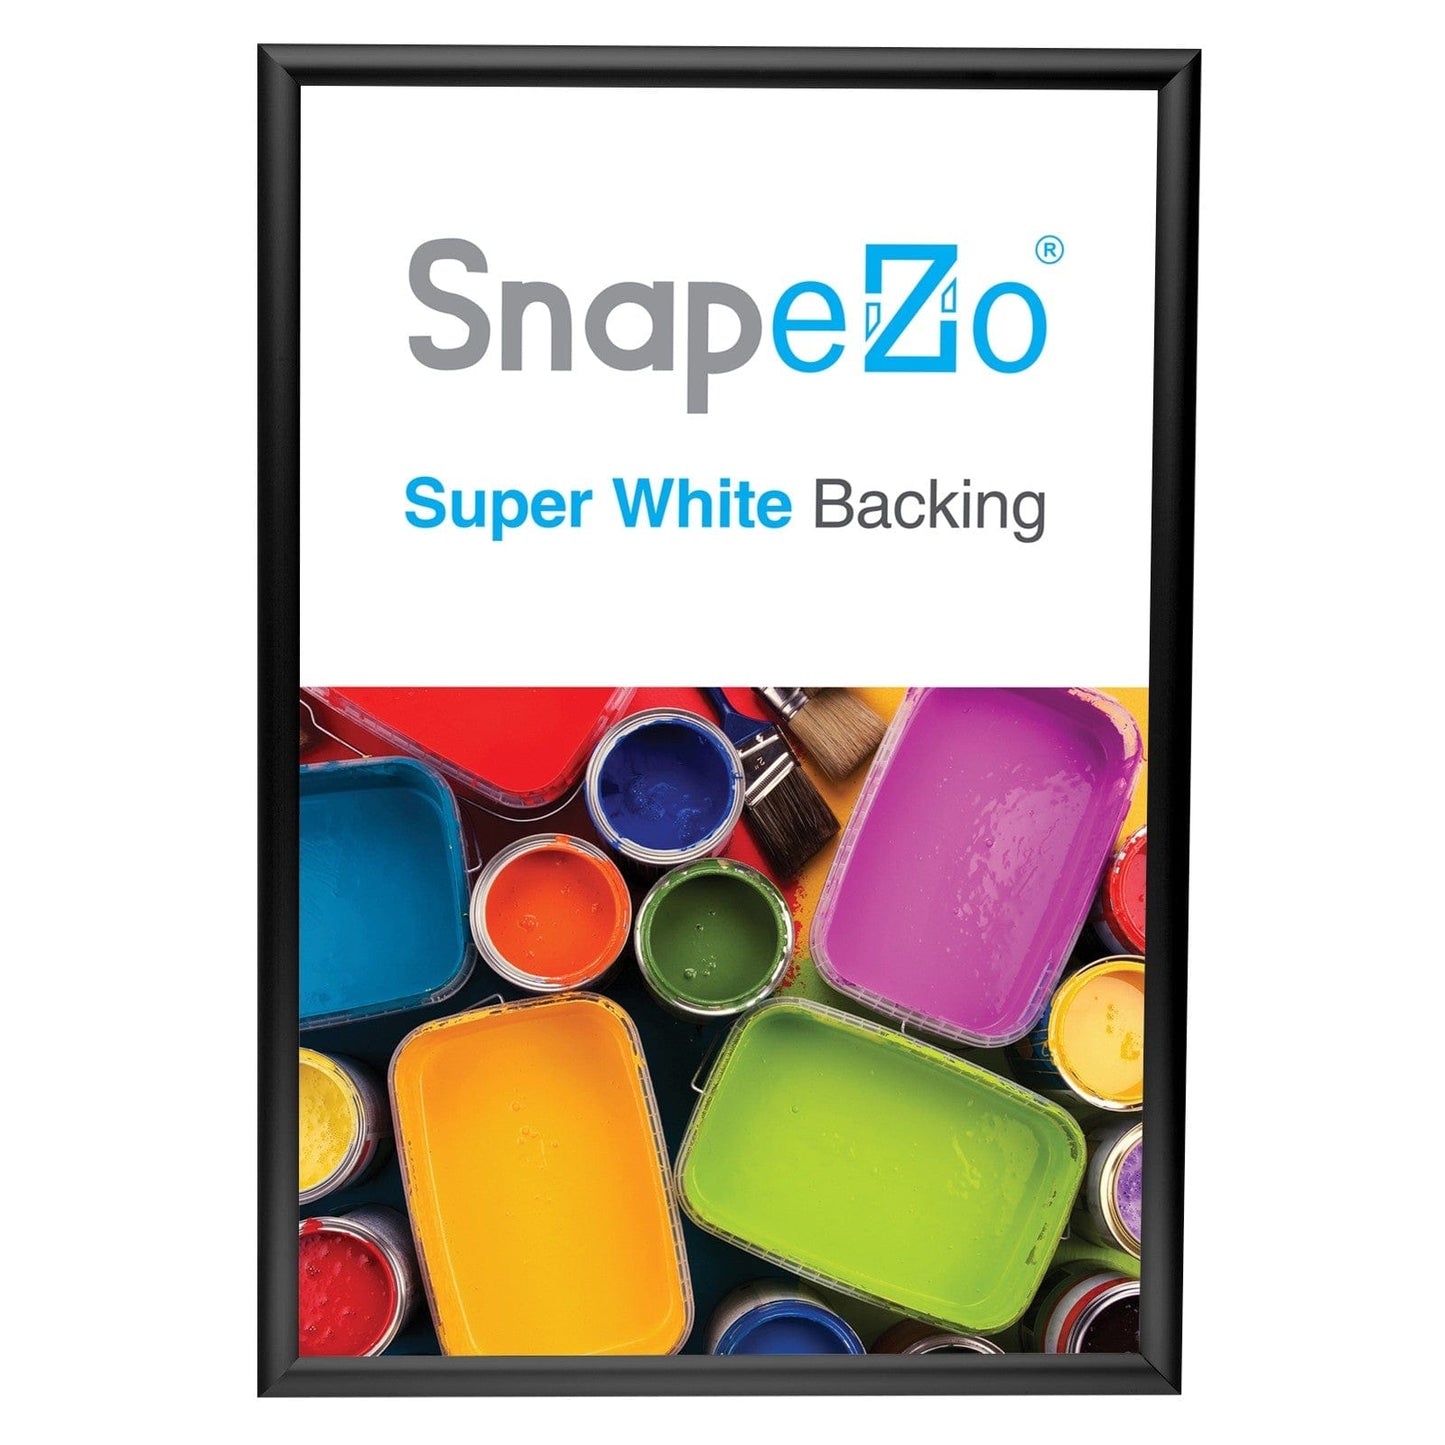 13x19 Black SnapeZo® Poster Snap Frame 1" - Snap Frames Direct